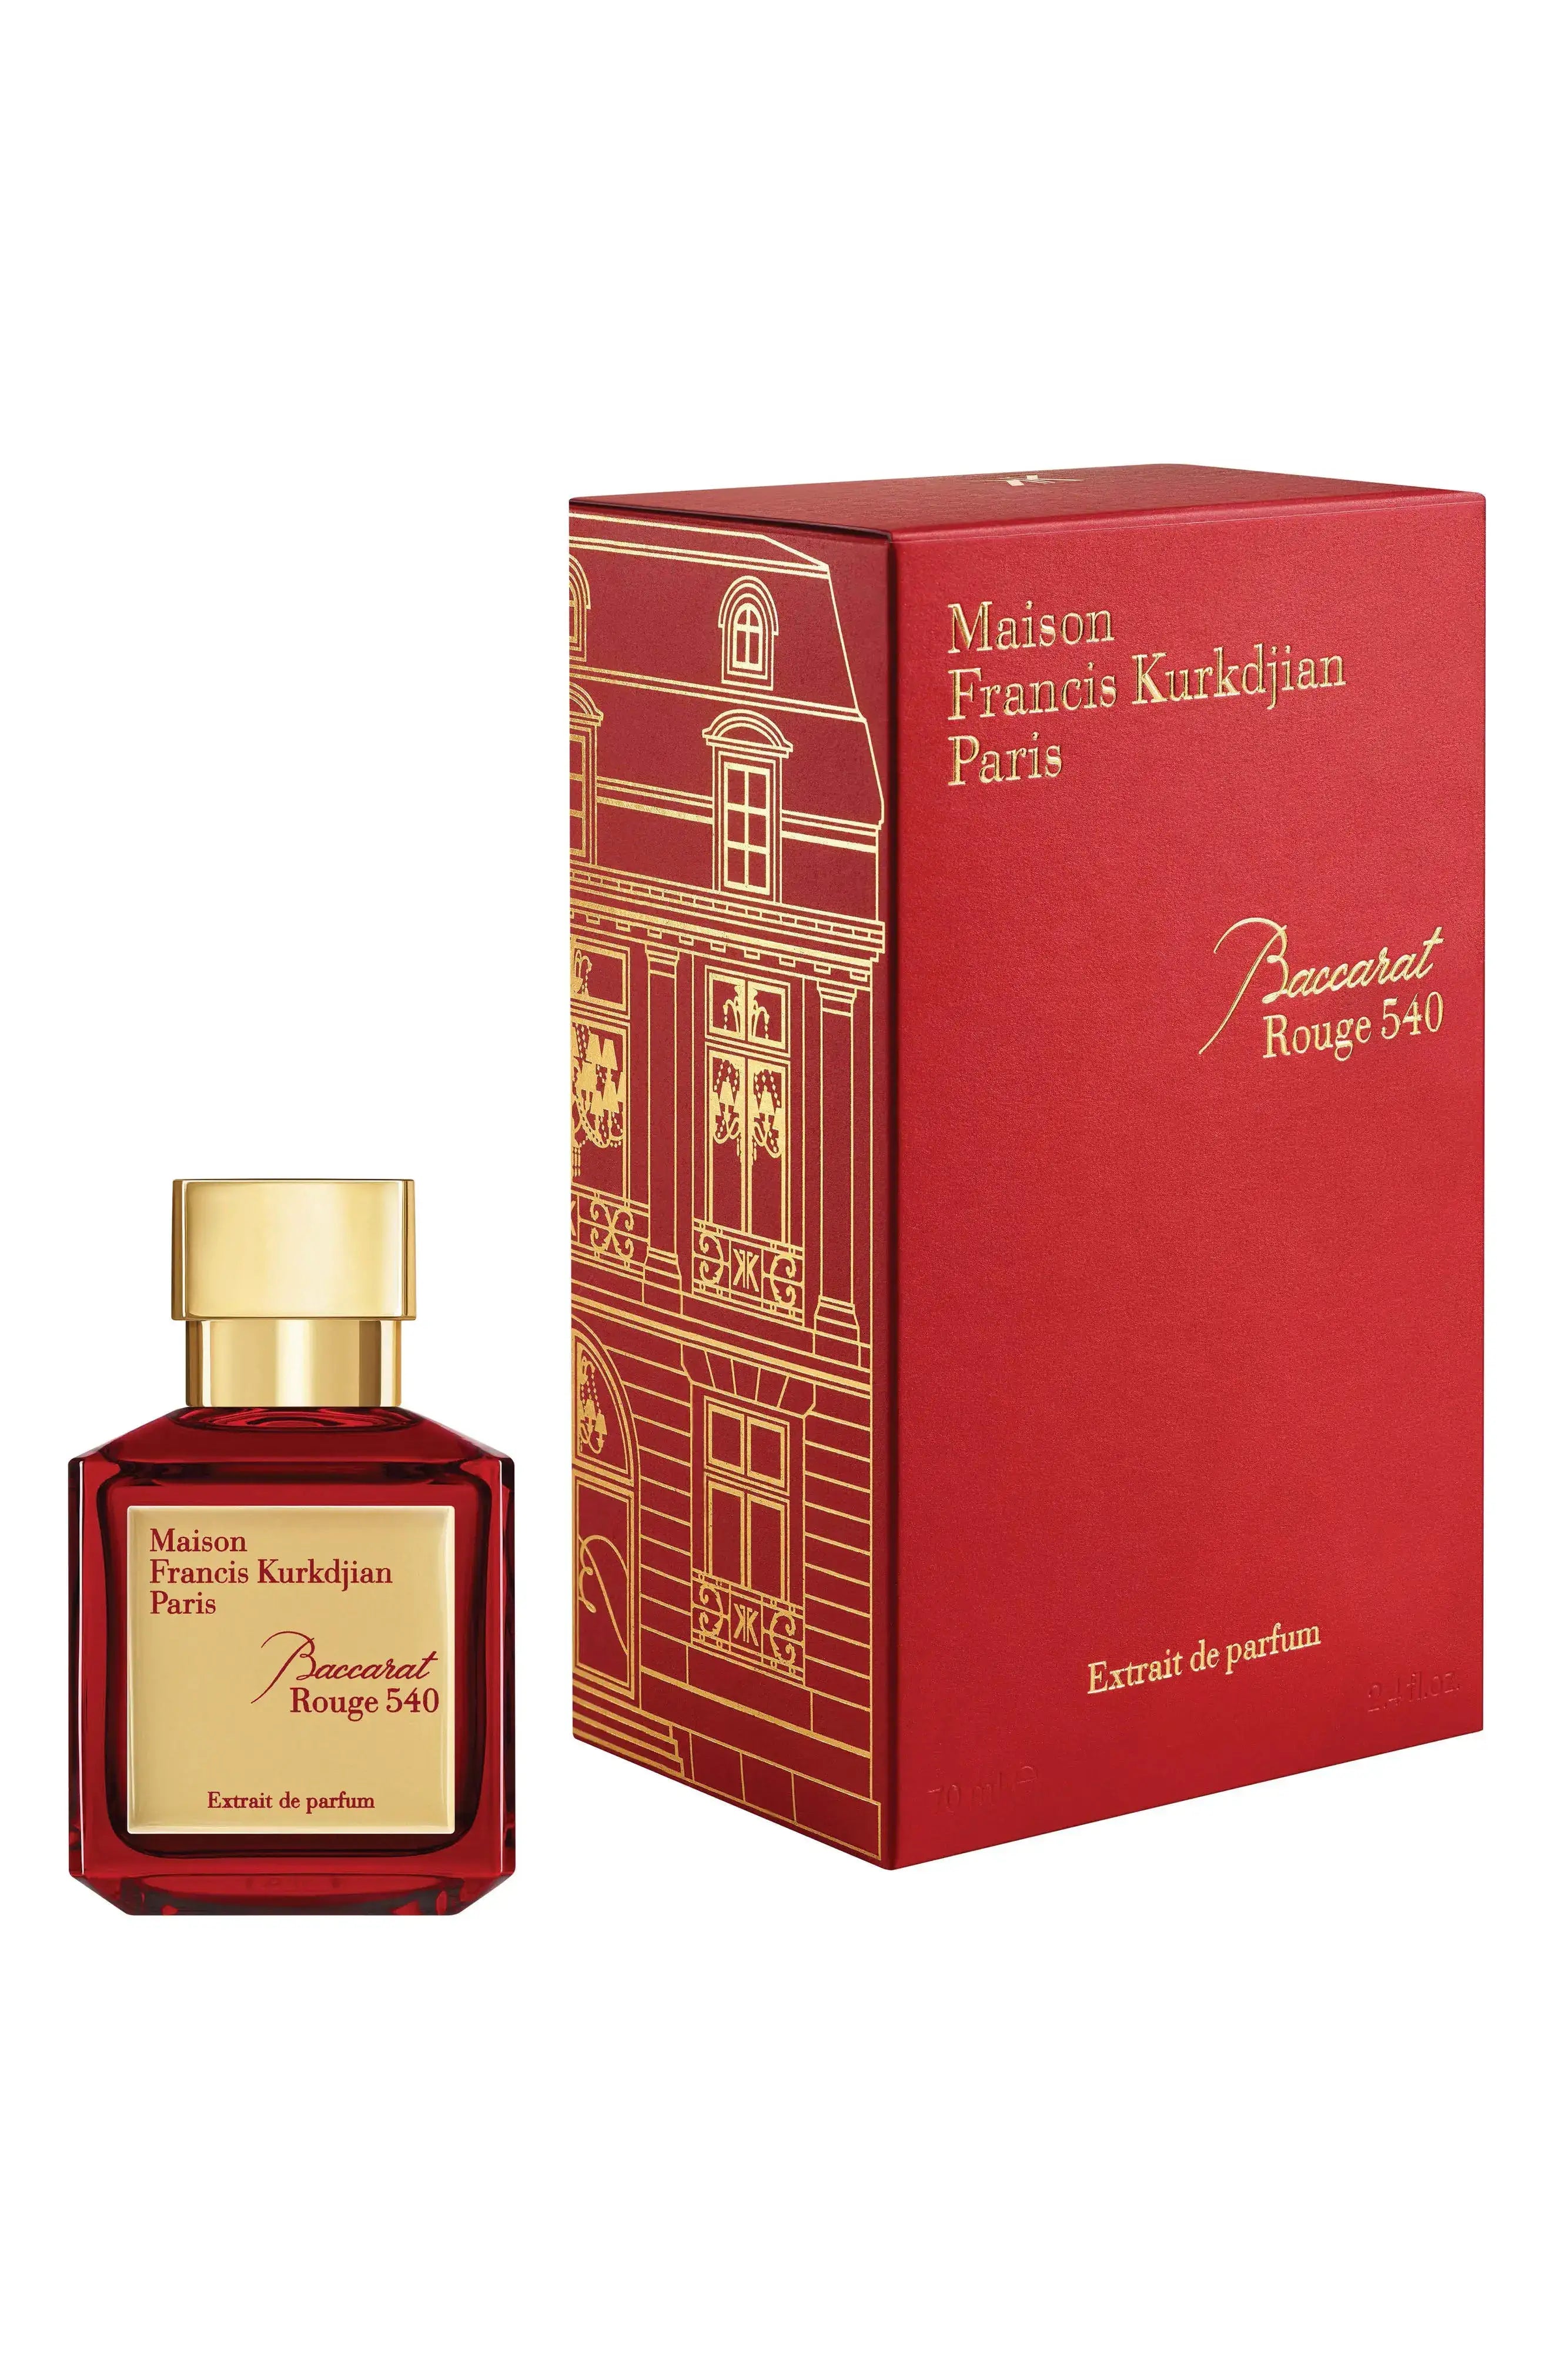 Baccarat Rouge Parfume, Maison Francis Perfume